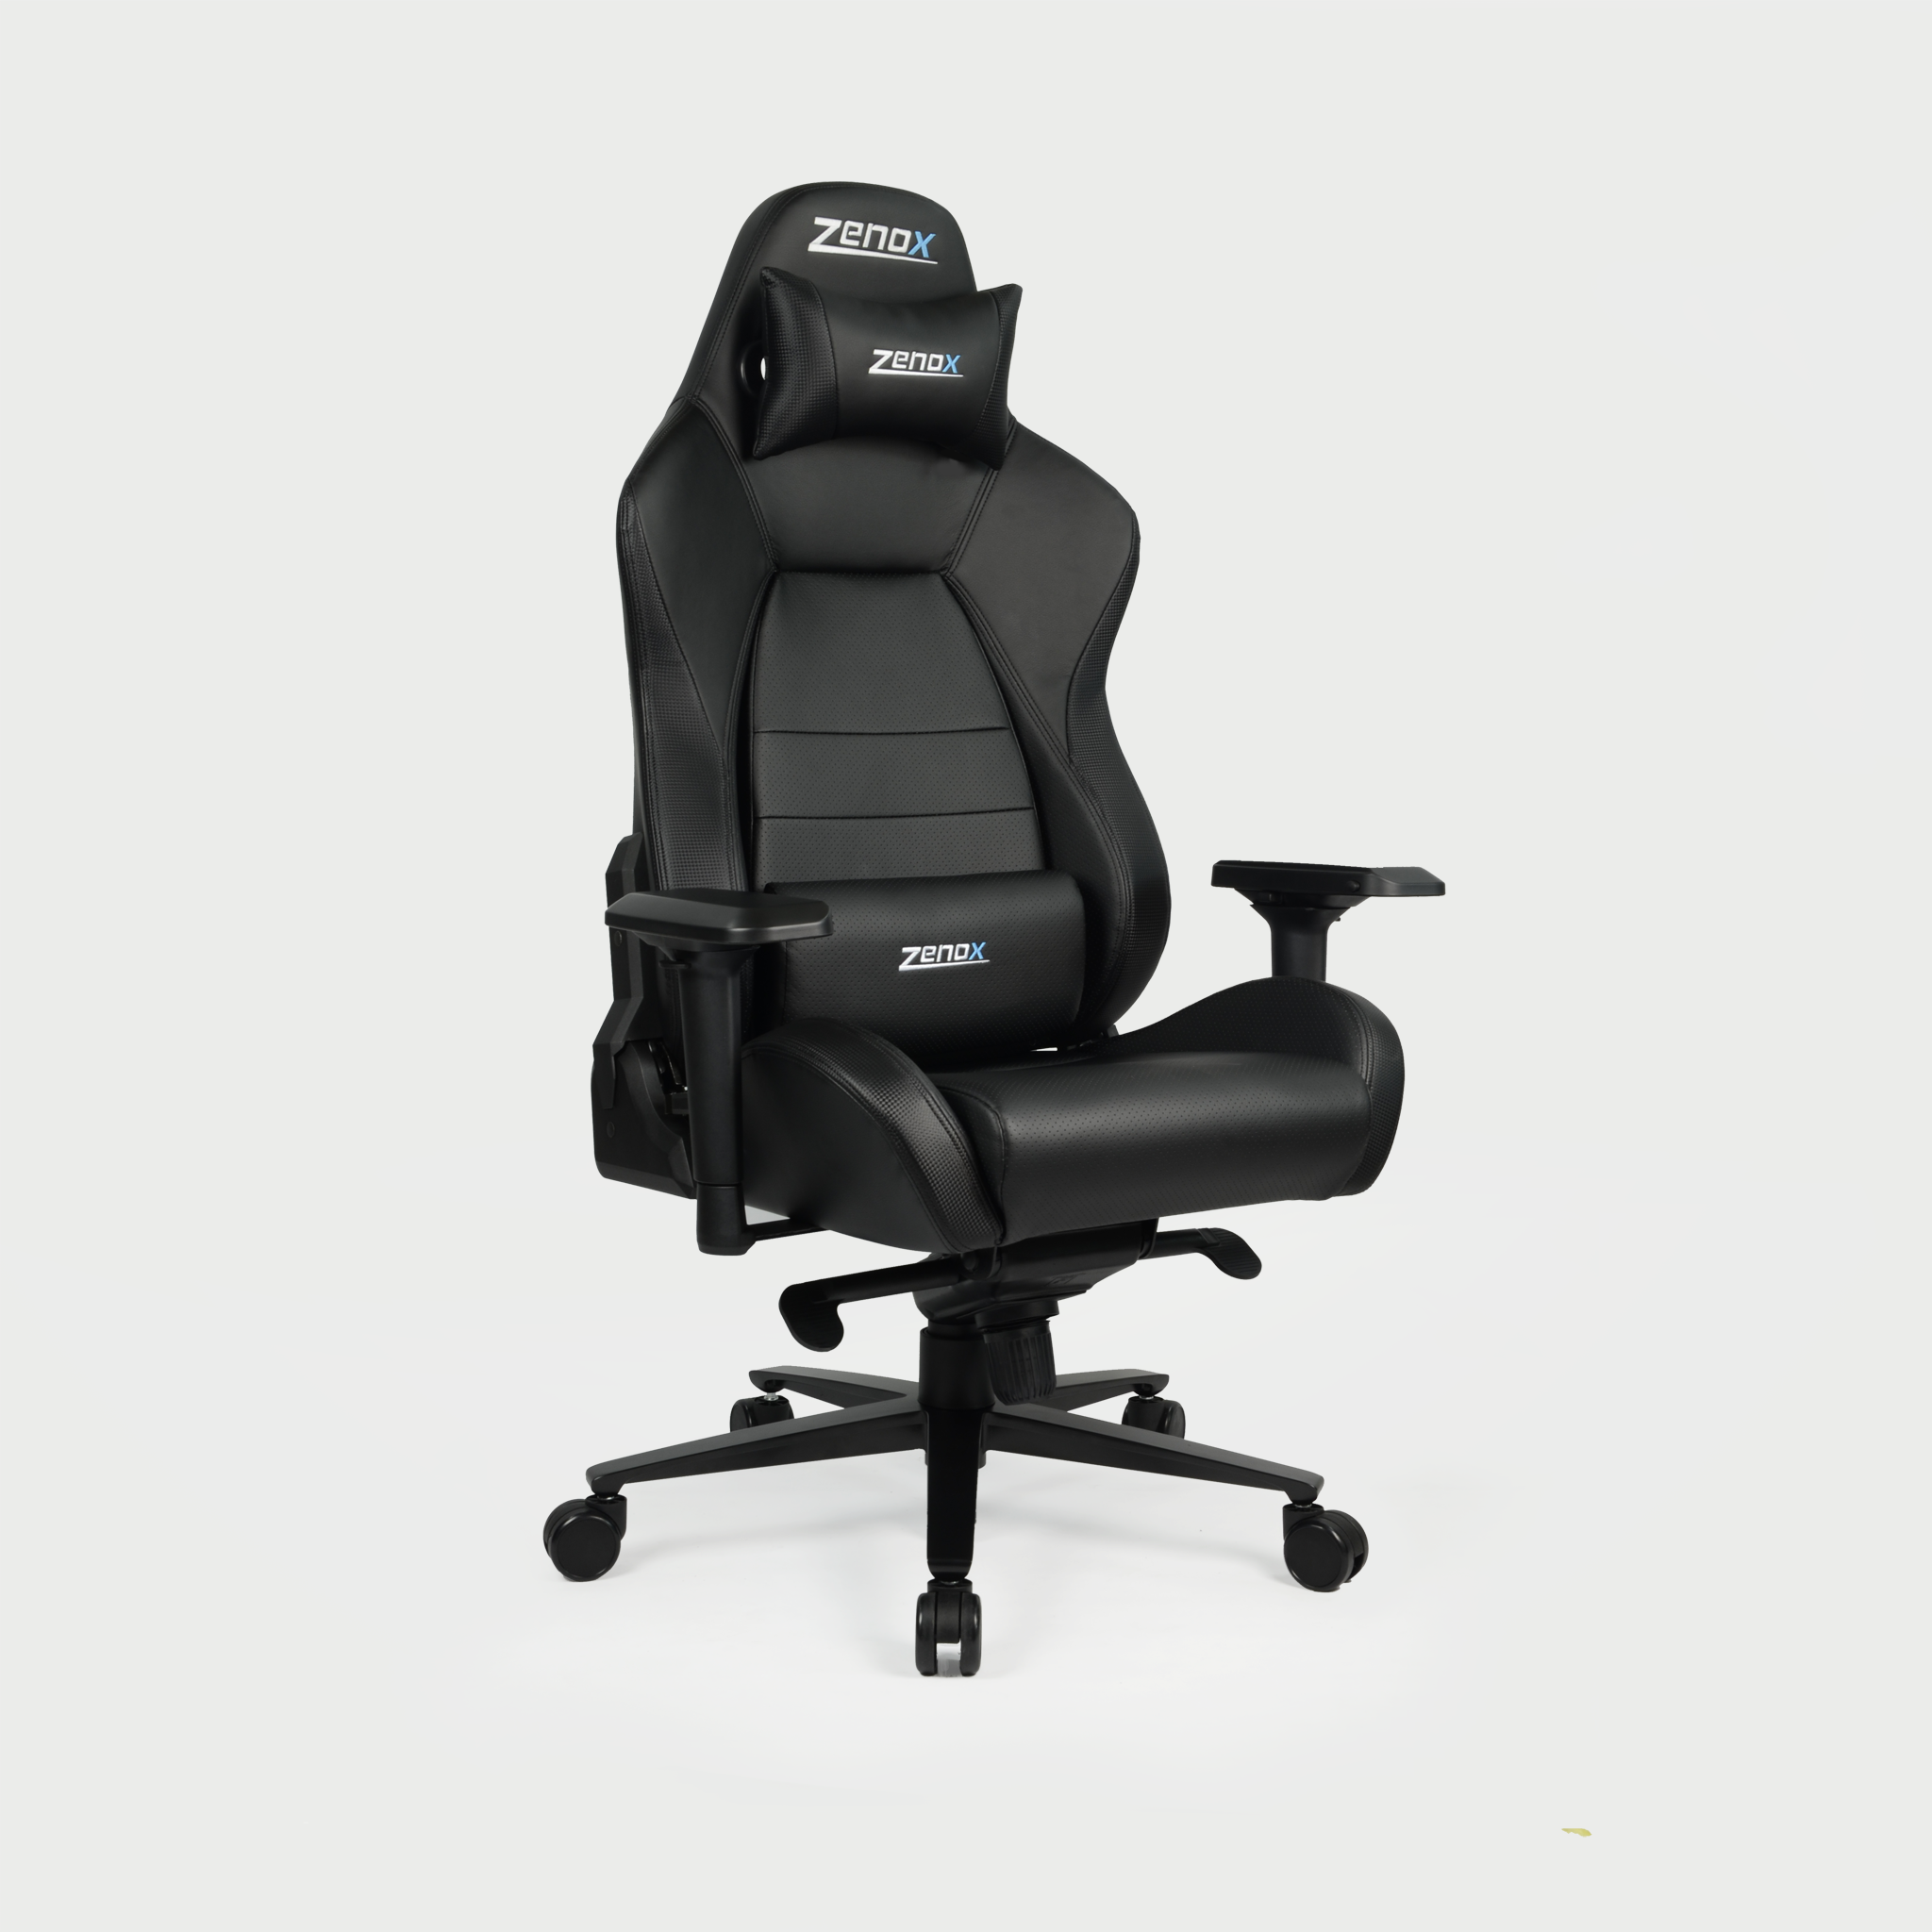 免費送貨】Zenox Jupiter Series Racing Chair 電腦椅(Z-8316)